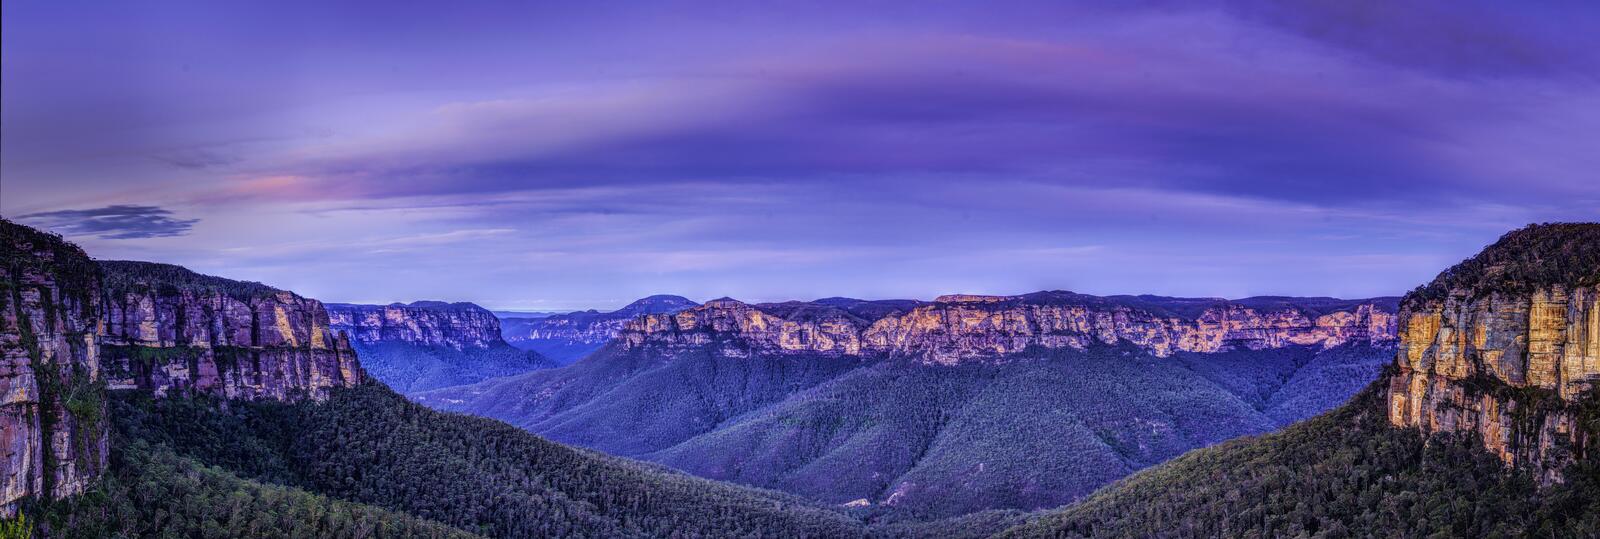 Обои Blue Mountains National Park Australian landscape Австралия на рабочий стол